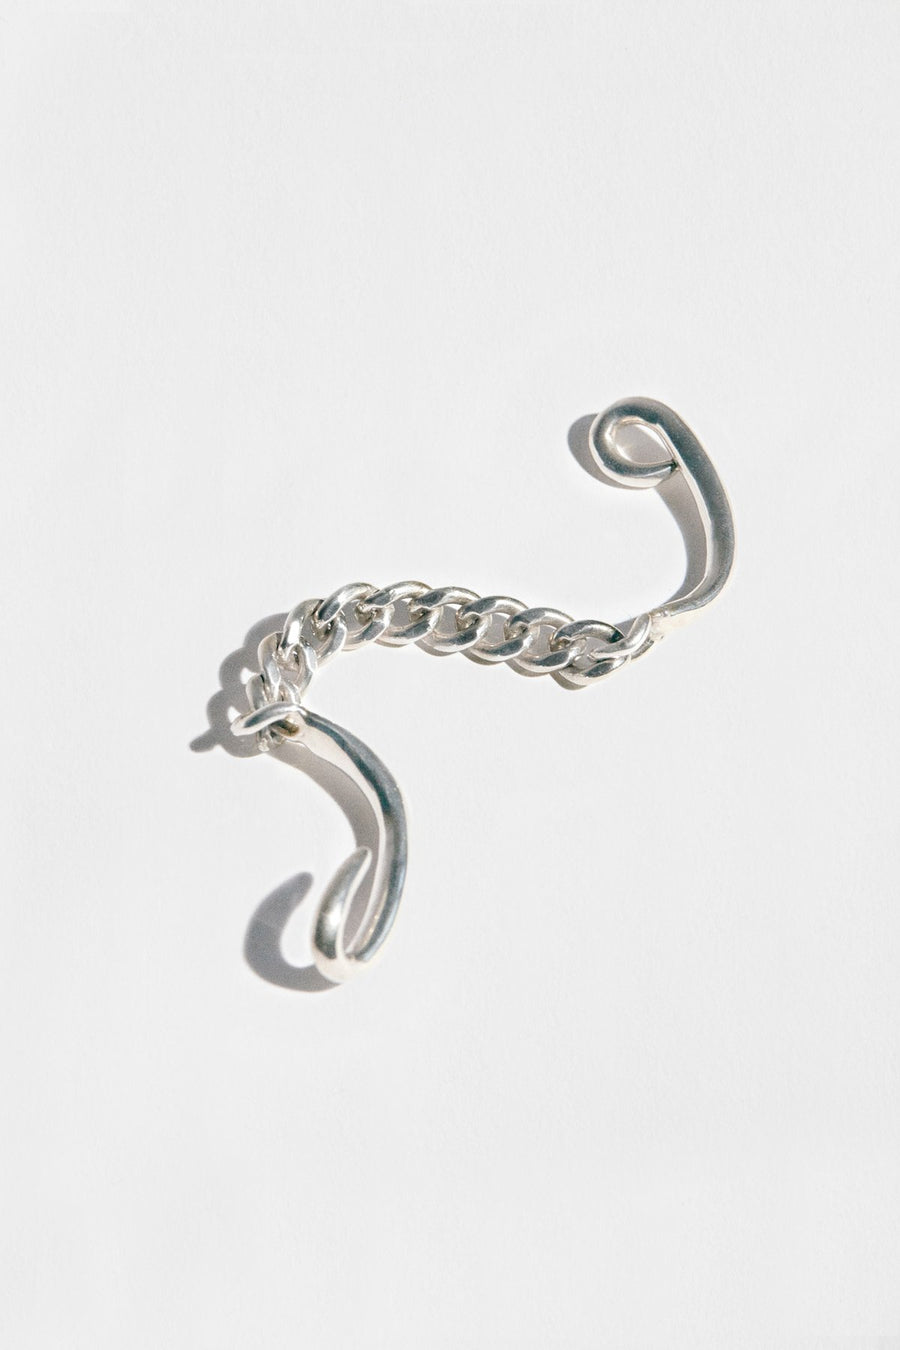 Hernan Herdez- Jewellery-jewelry-Jeryco Store- London- Hook Bracelet-bracelets for him-bracelets for her-unisex bracelets- sterling silver- chain bracelet- toggle bracelet-chunky sterling silver bracelet-Hook chain bracelet